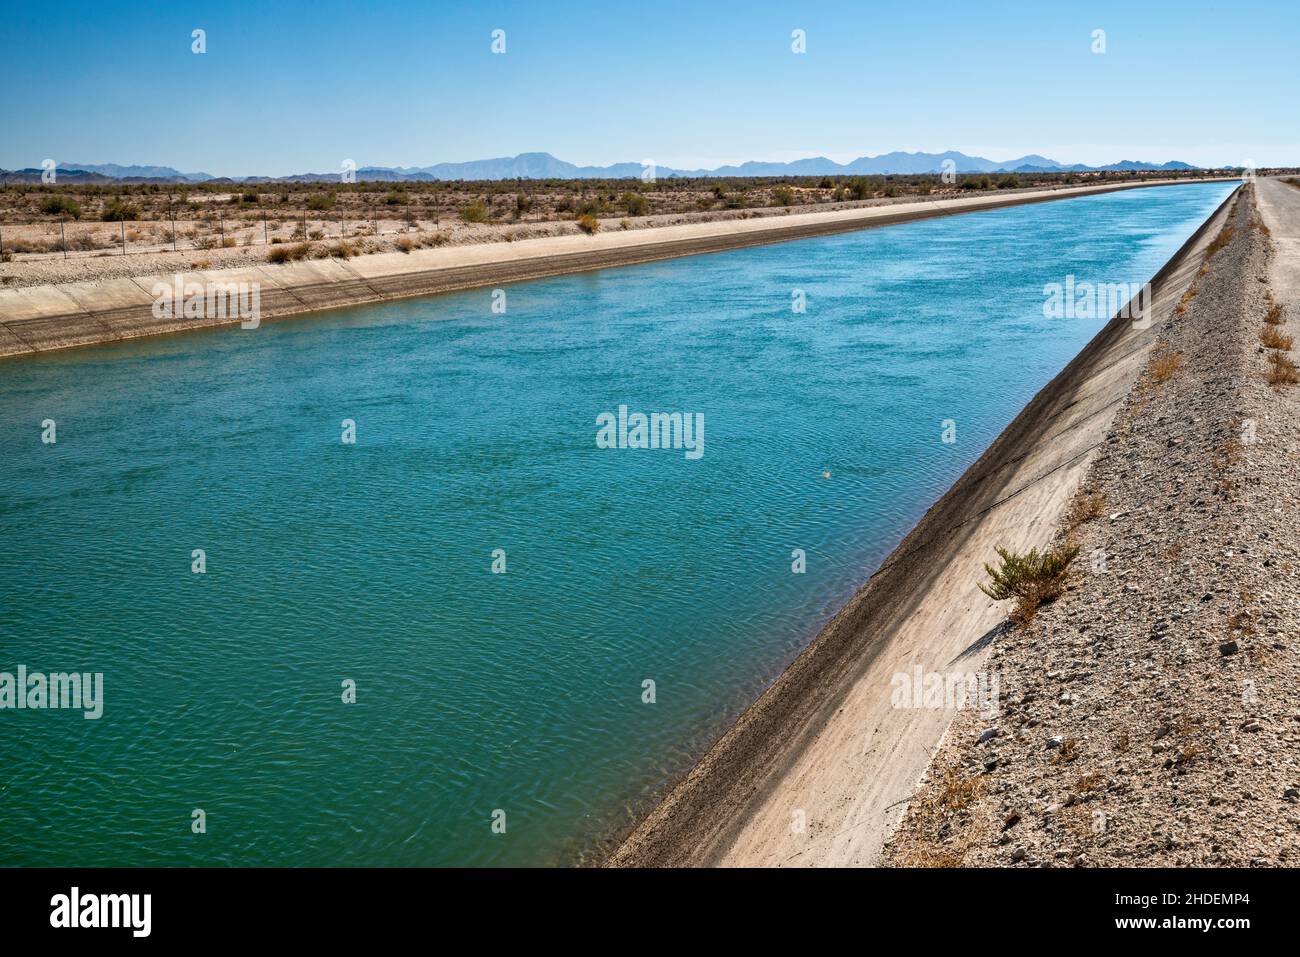 Arizona Project Canal, Swansea Mine Road, Sonoran Desert, Arizona, USA Stockfoto